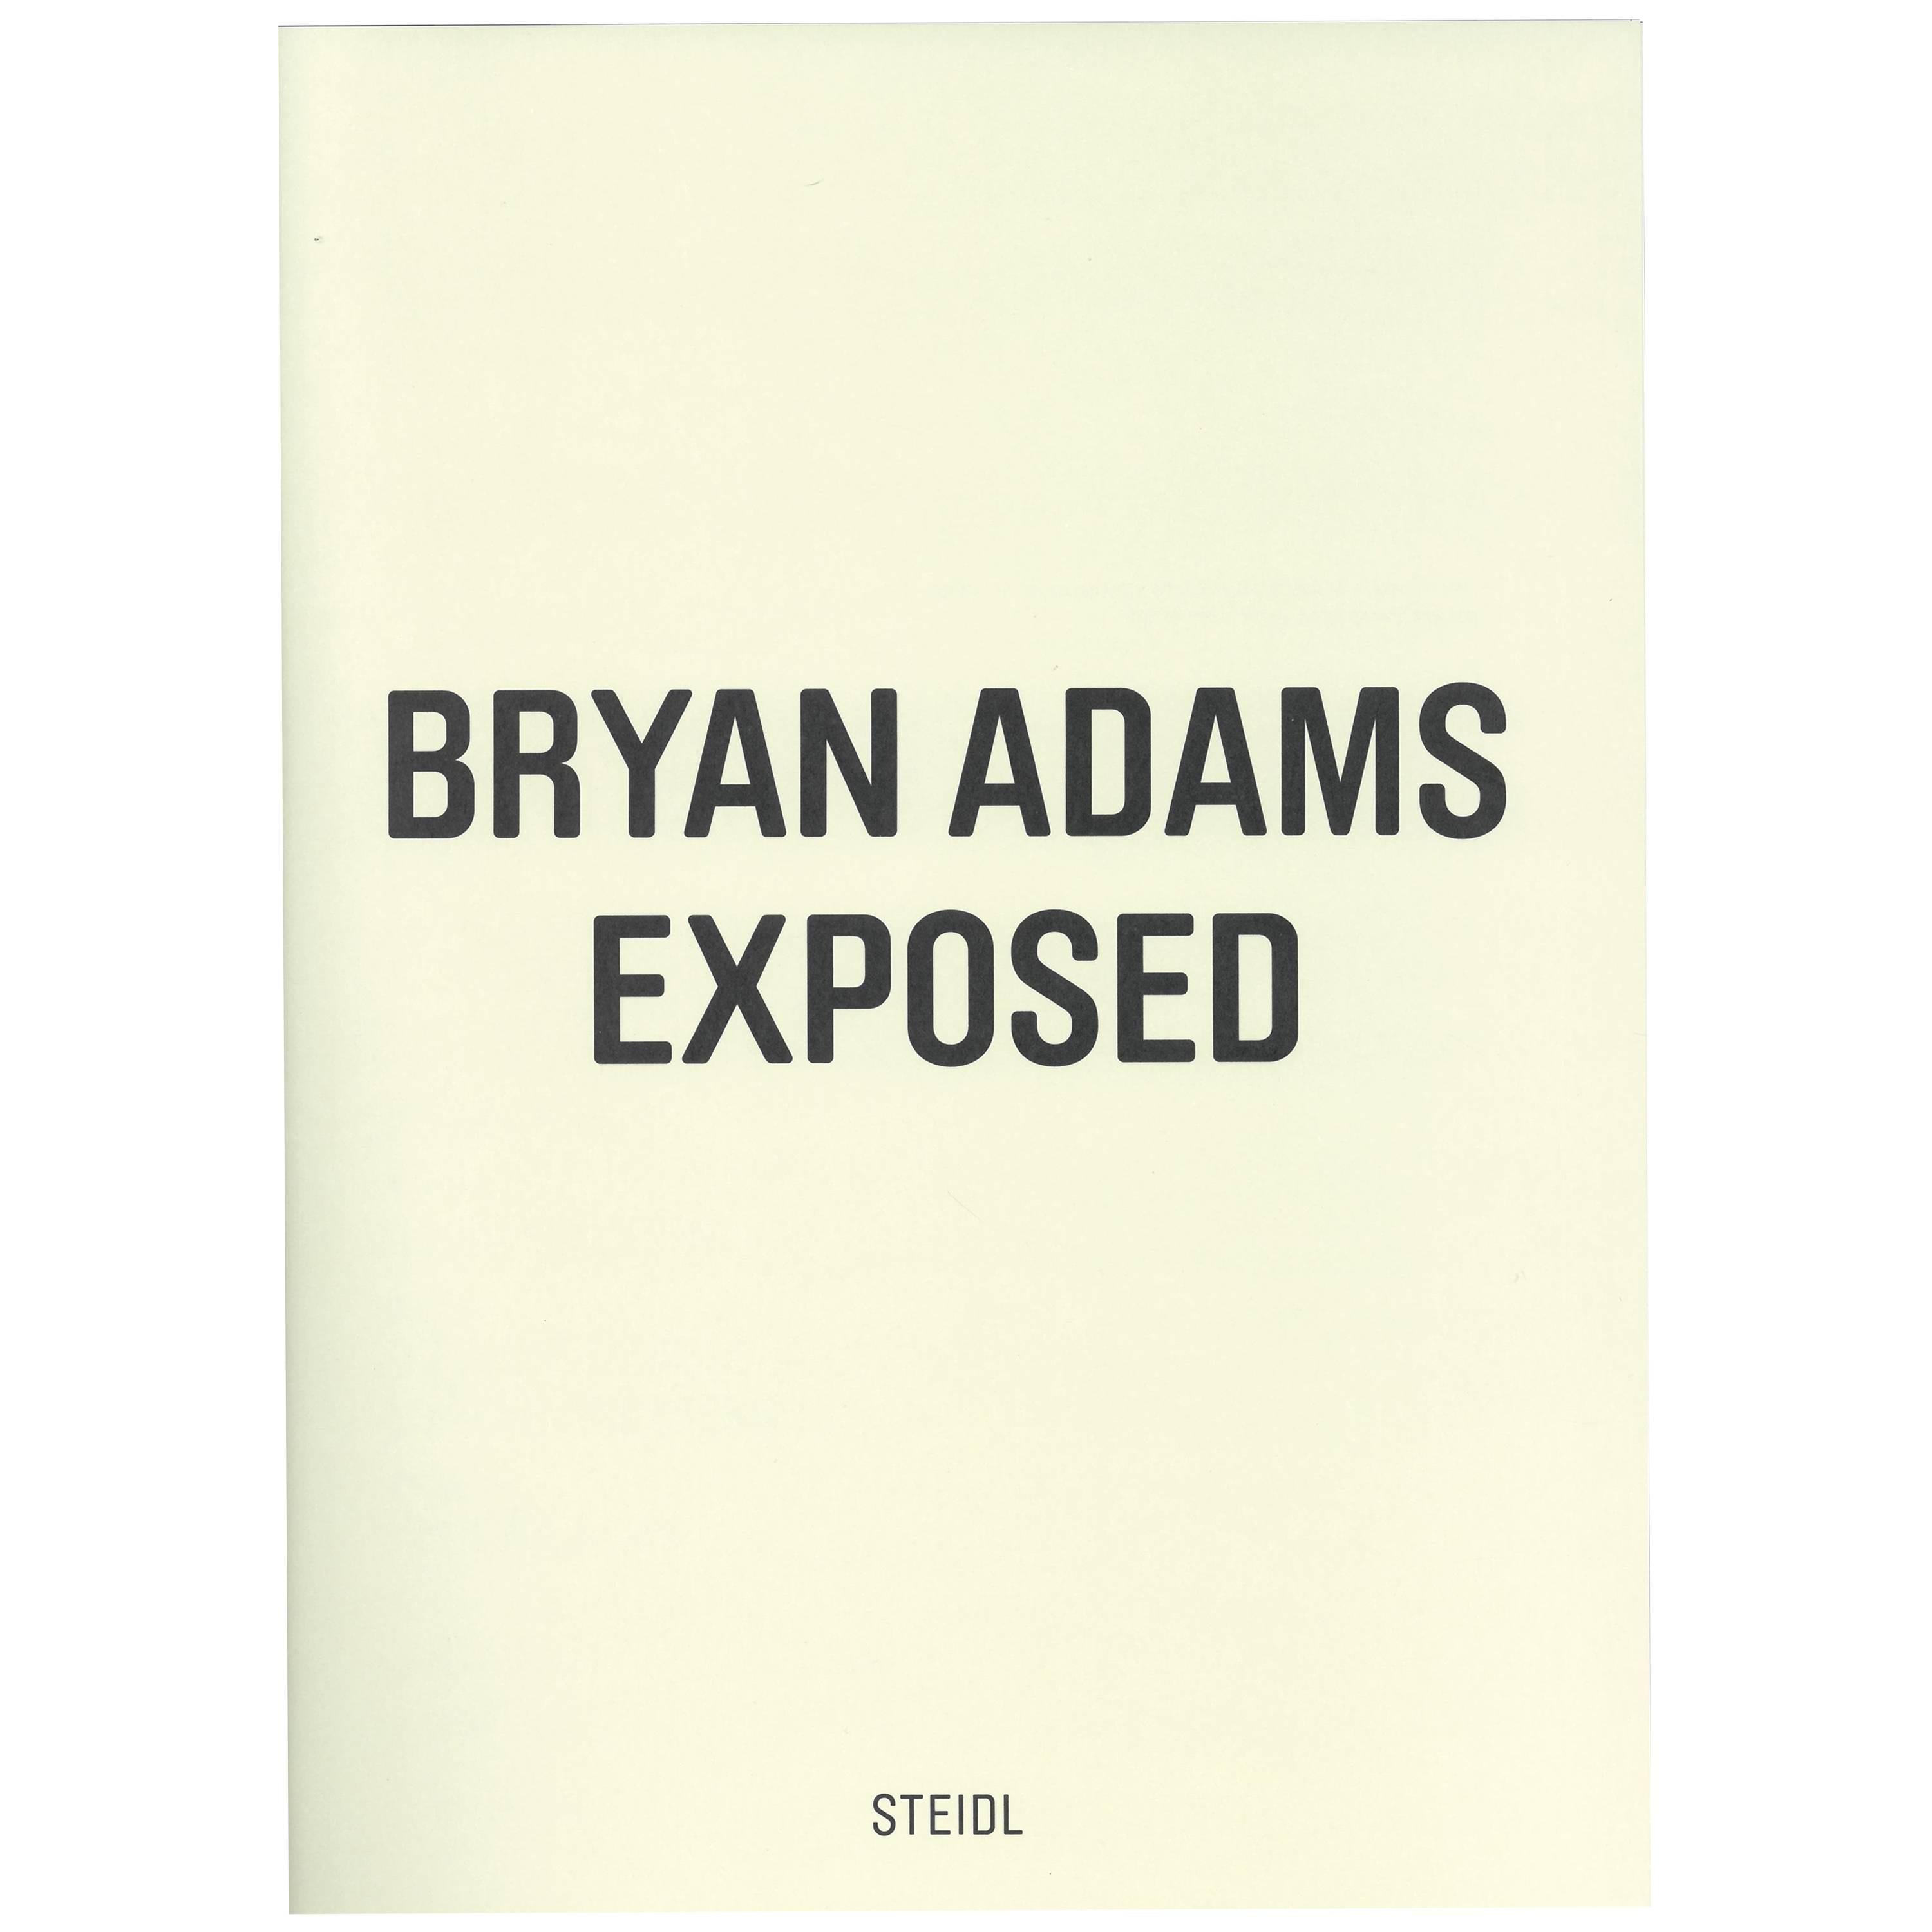 Bryan Adams - Exposed (Book) For Sale